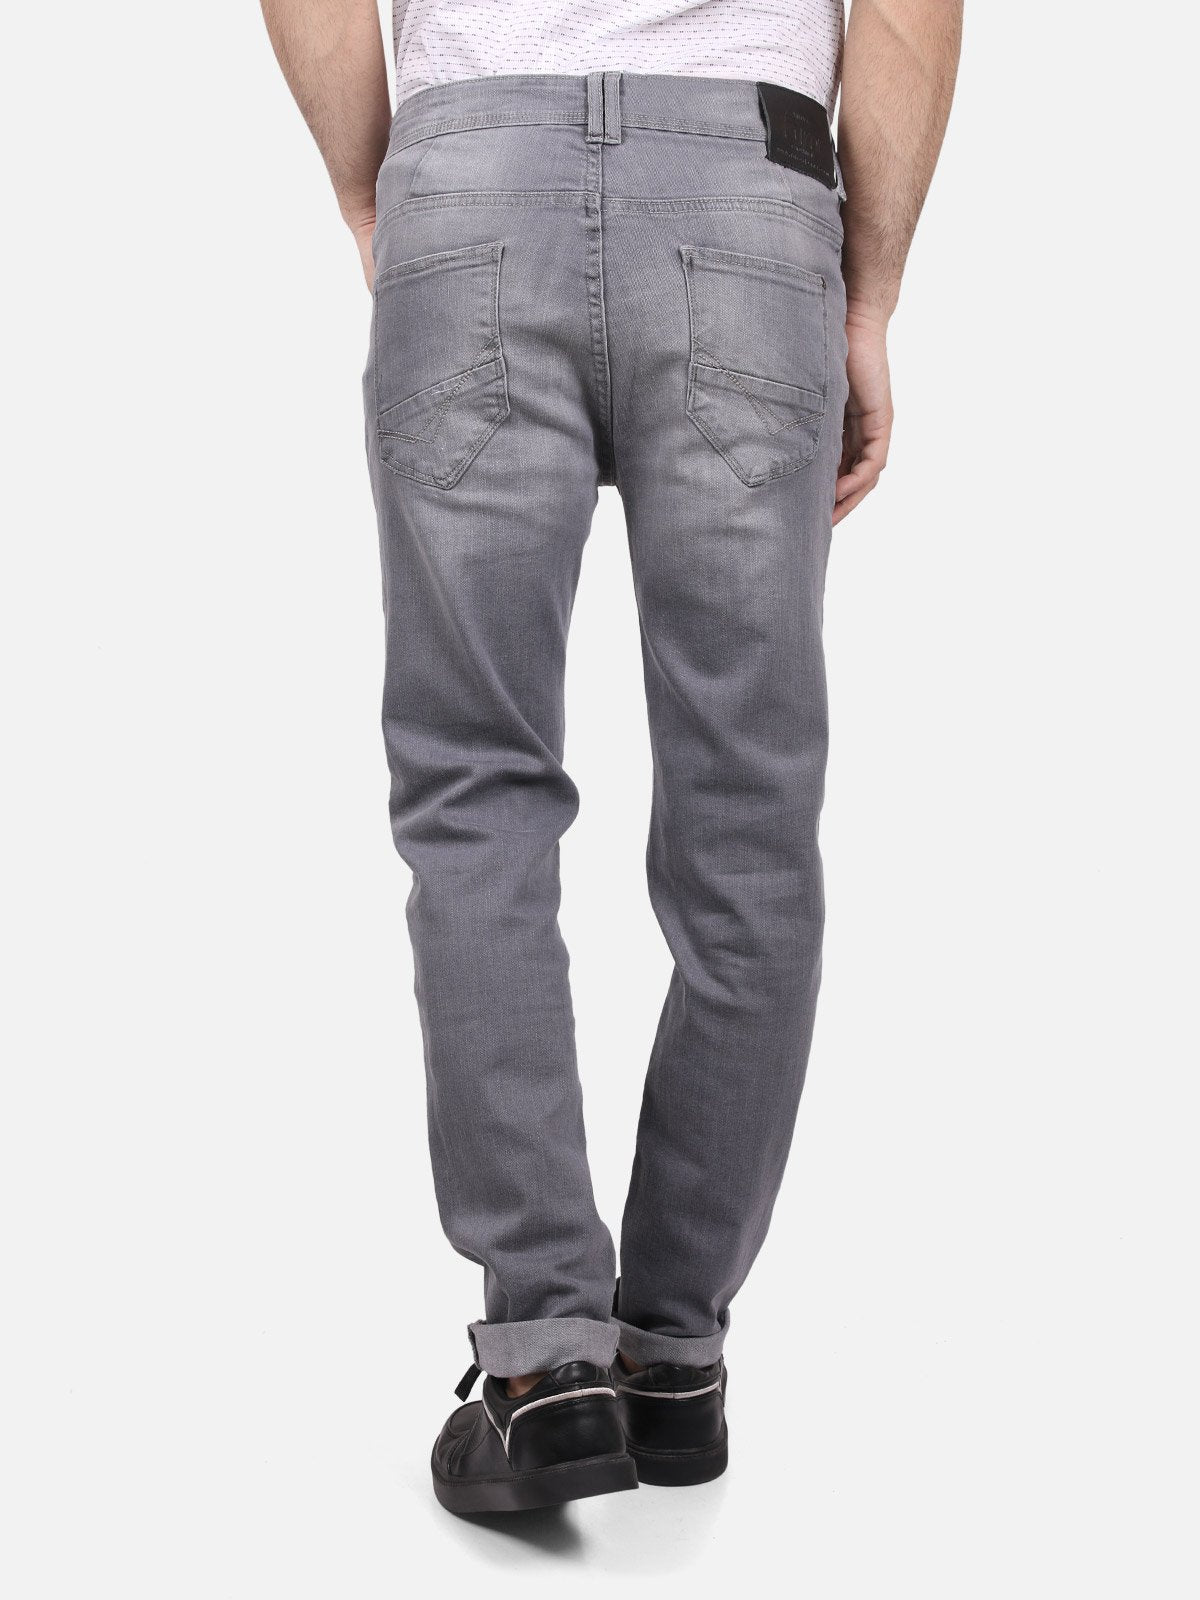 Men's Grey Denim Jeans - FMBP18-009